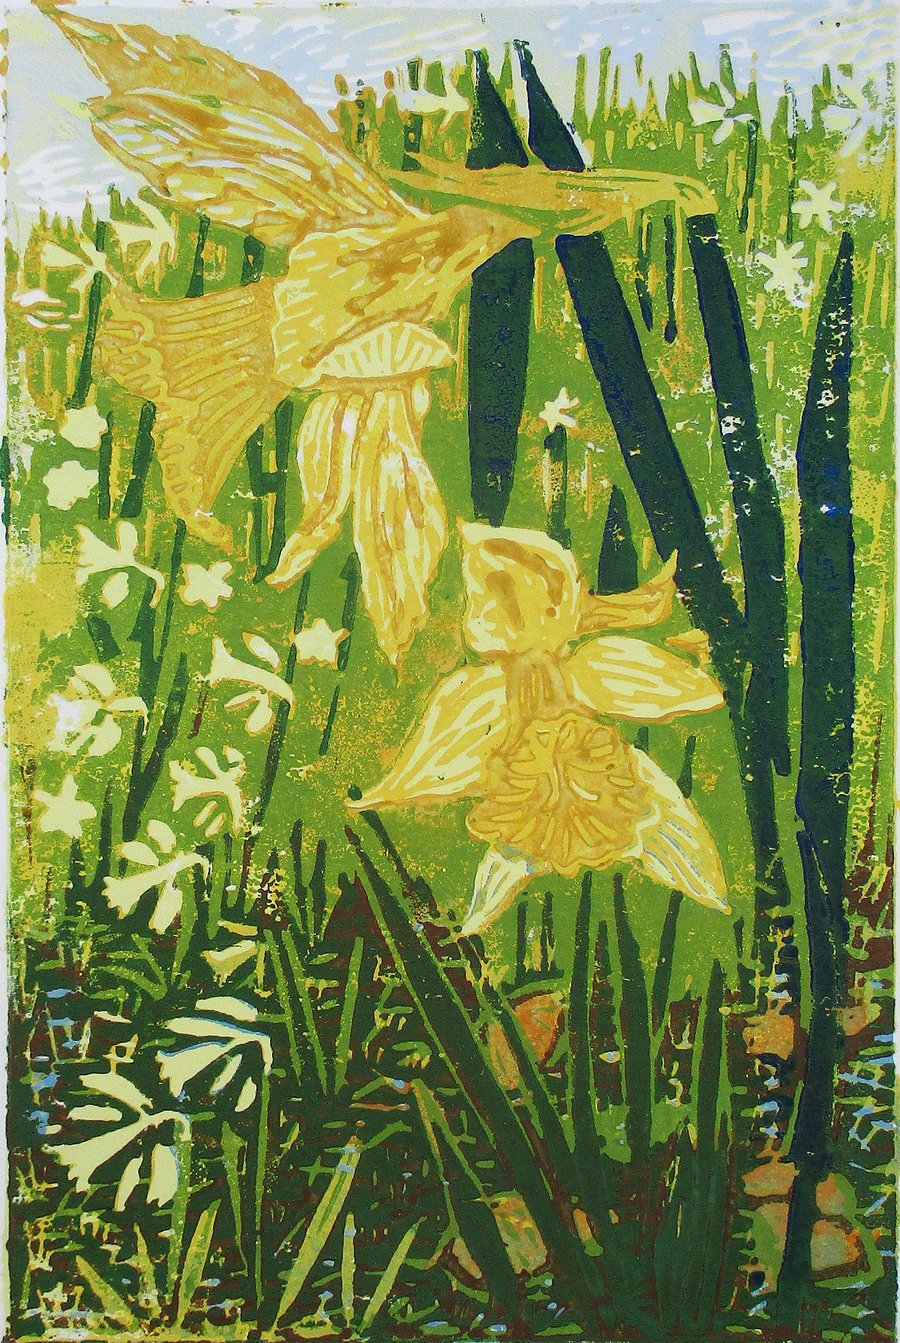 Daffodils, Spring Flowers - Original Linocut - LISTING RESERVED FOR SAM